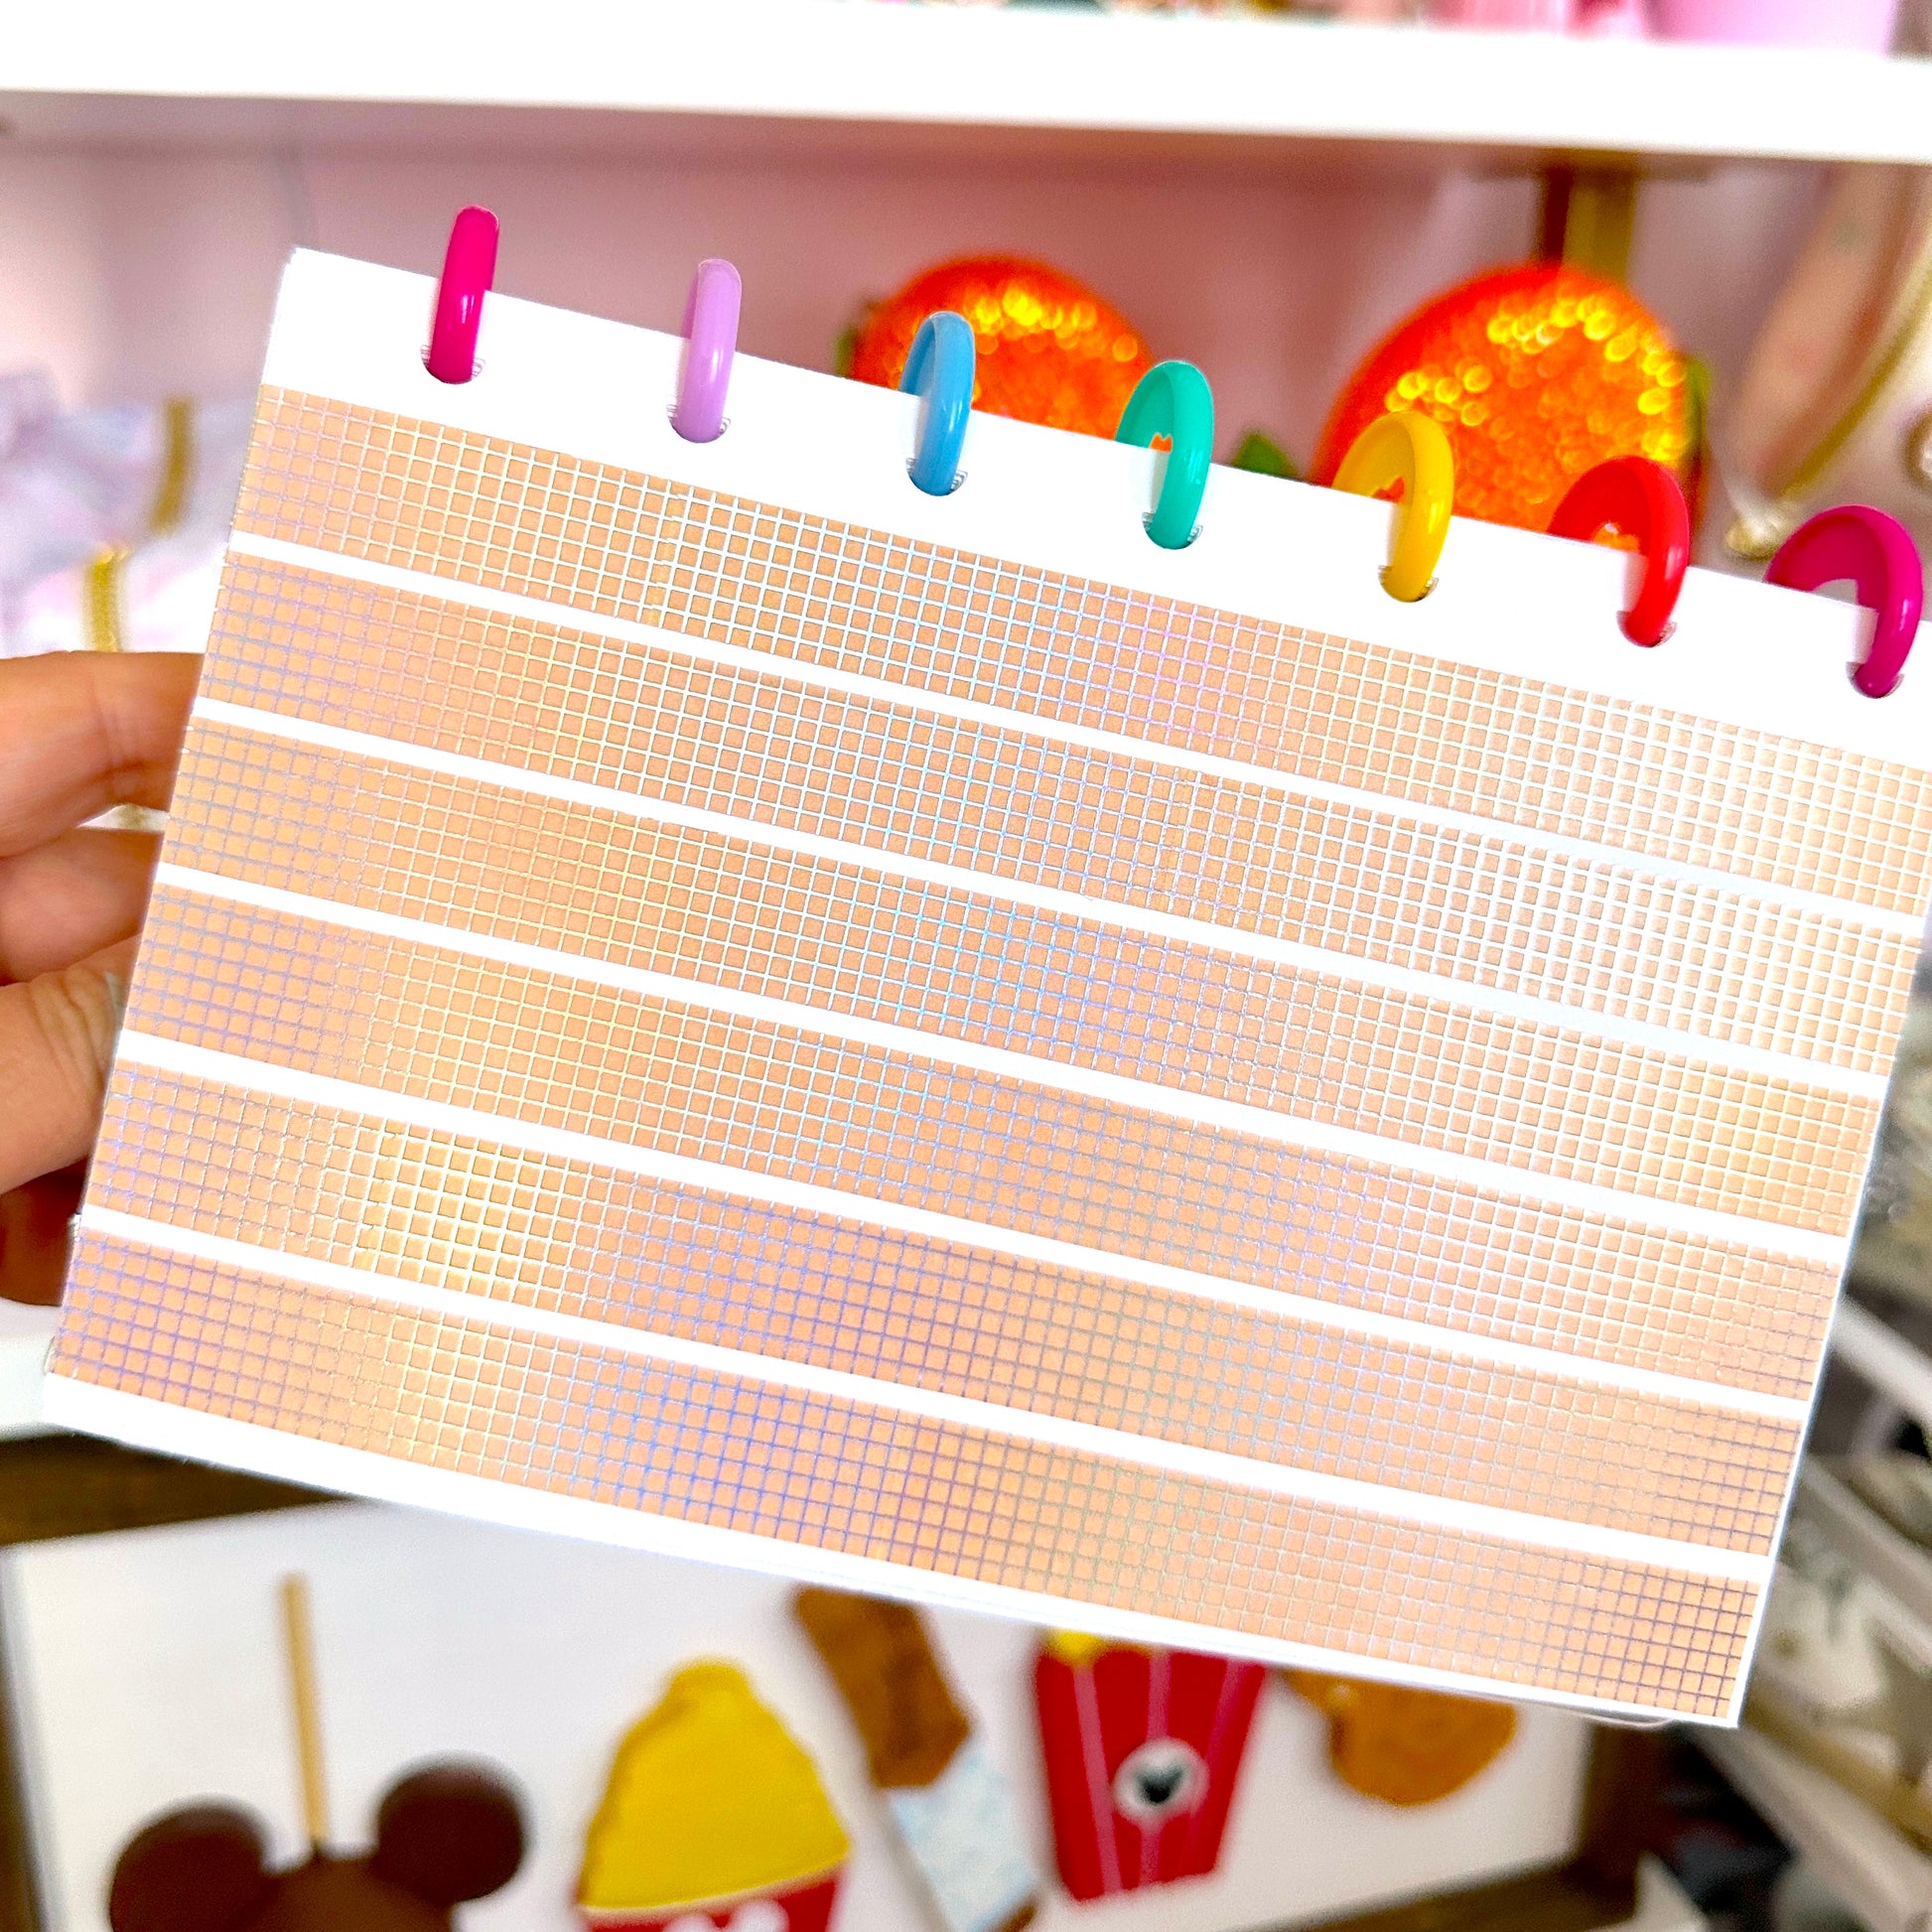 Happy Planner 10 Roll Rainbow Washi Tape